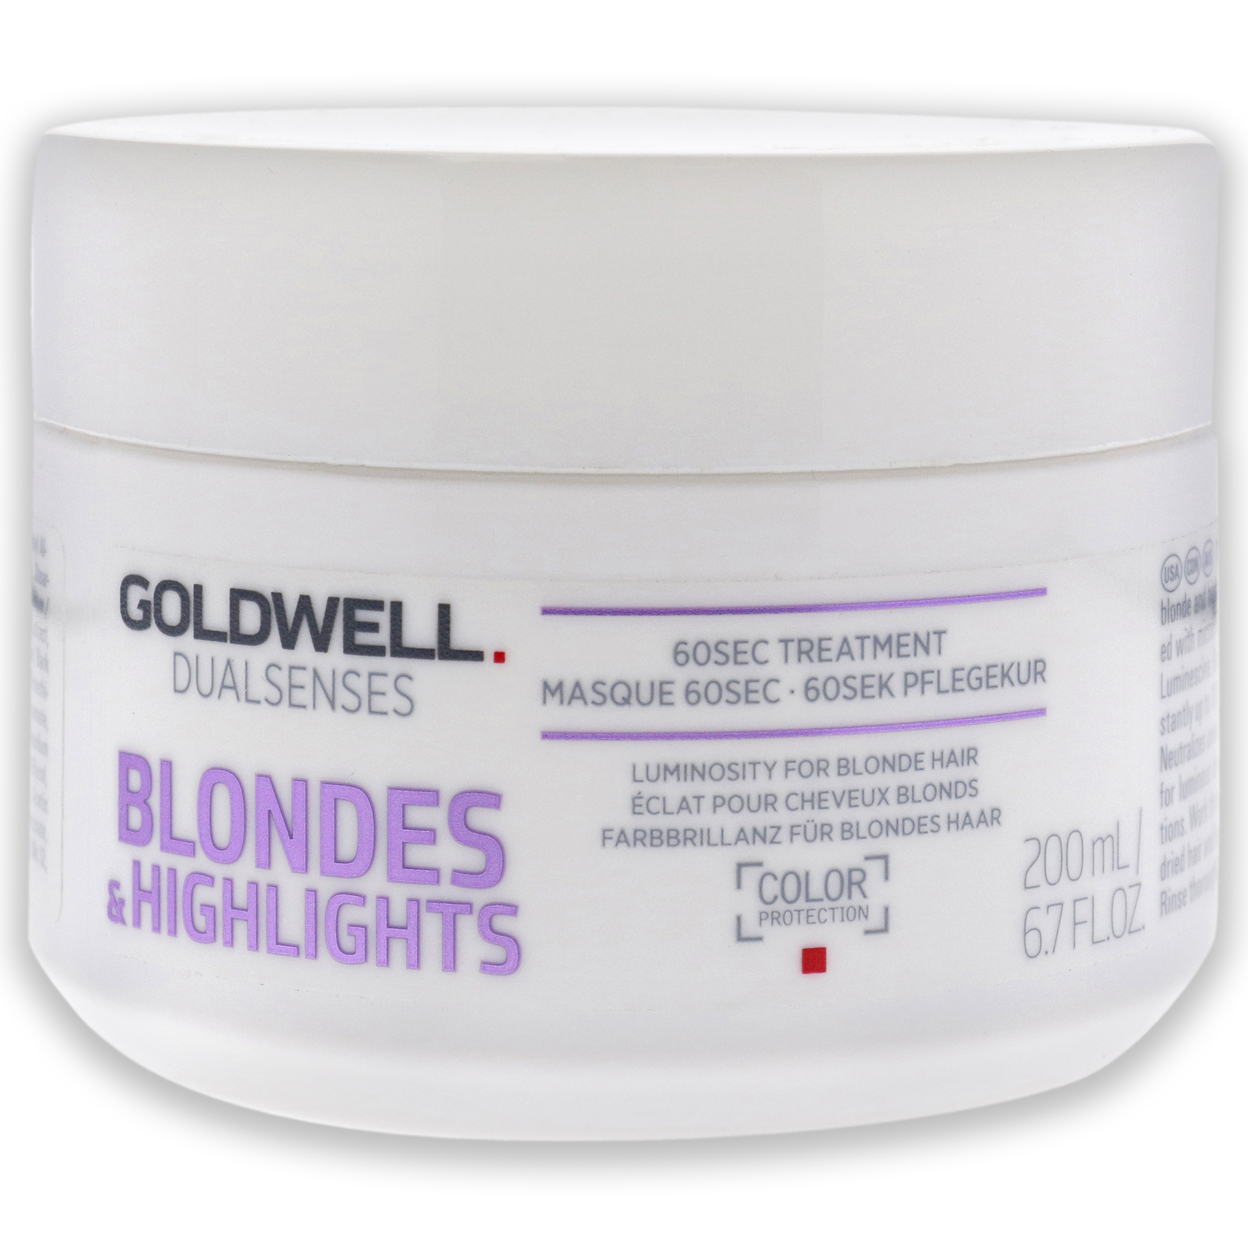 Goldwell Unisex HAIRCARE Dualsenses Blondes Highlights 60 Sec Treatment 6.7 Oz